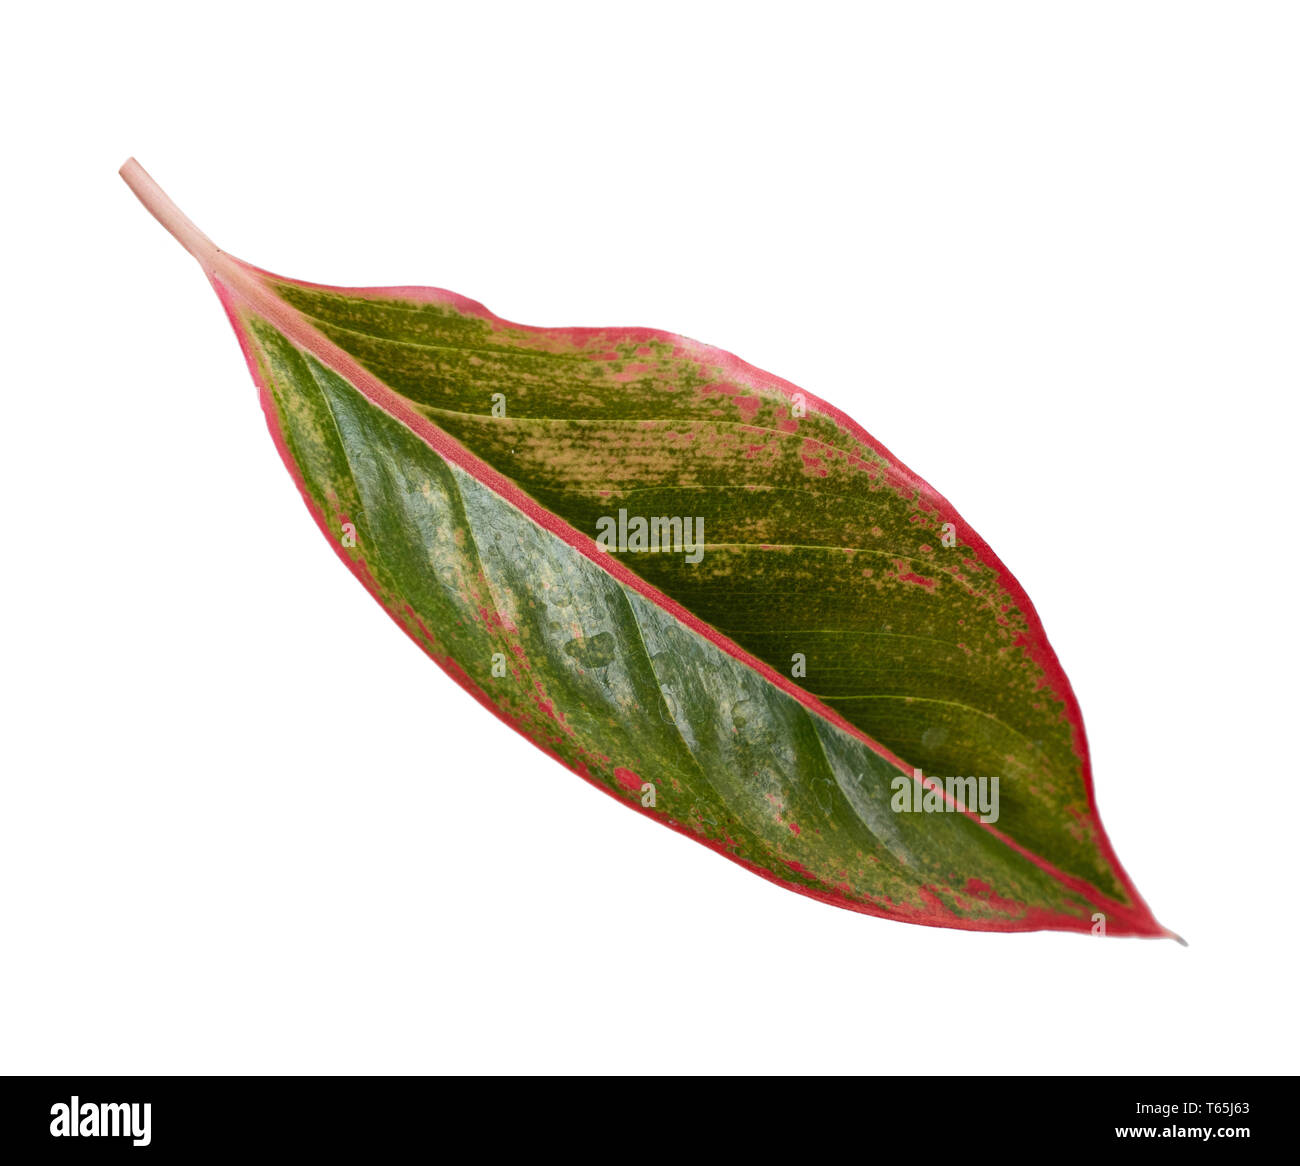 Beautiful leaf of Aglaonema Lipstik plant Stock Photo